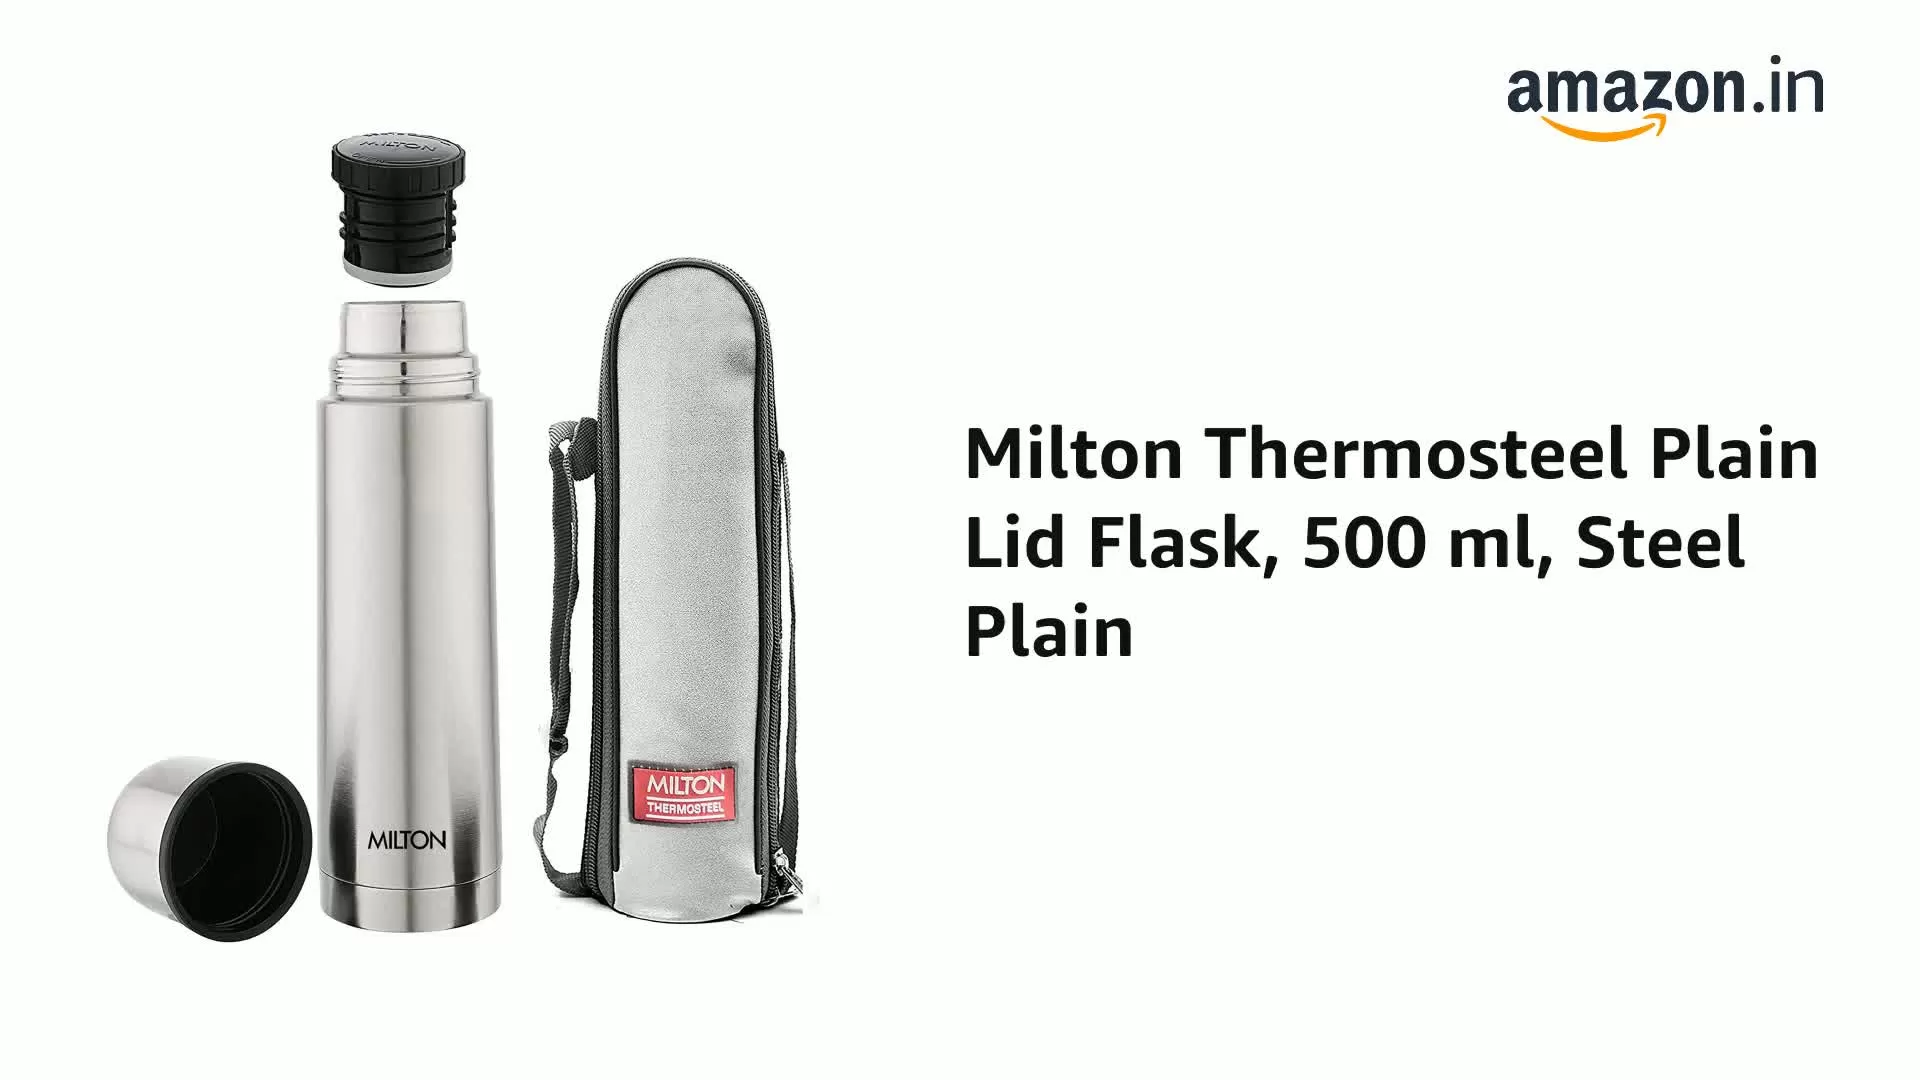 MILTON Thermosteel Plain Lid Flask 500 ml Steel Plain, 2 image